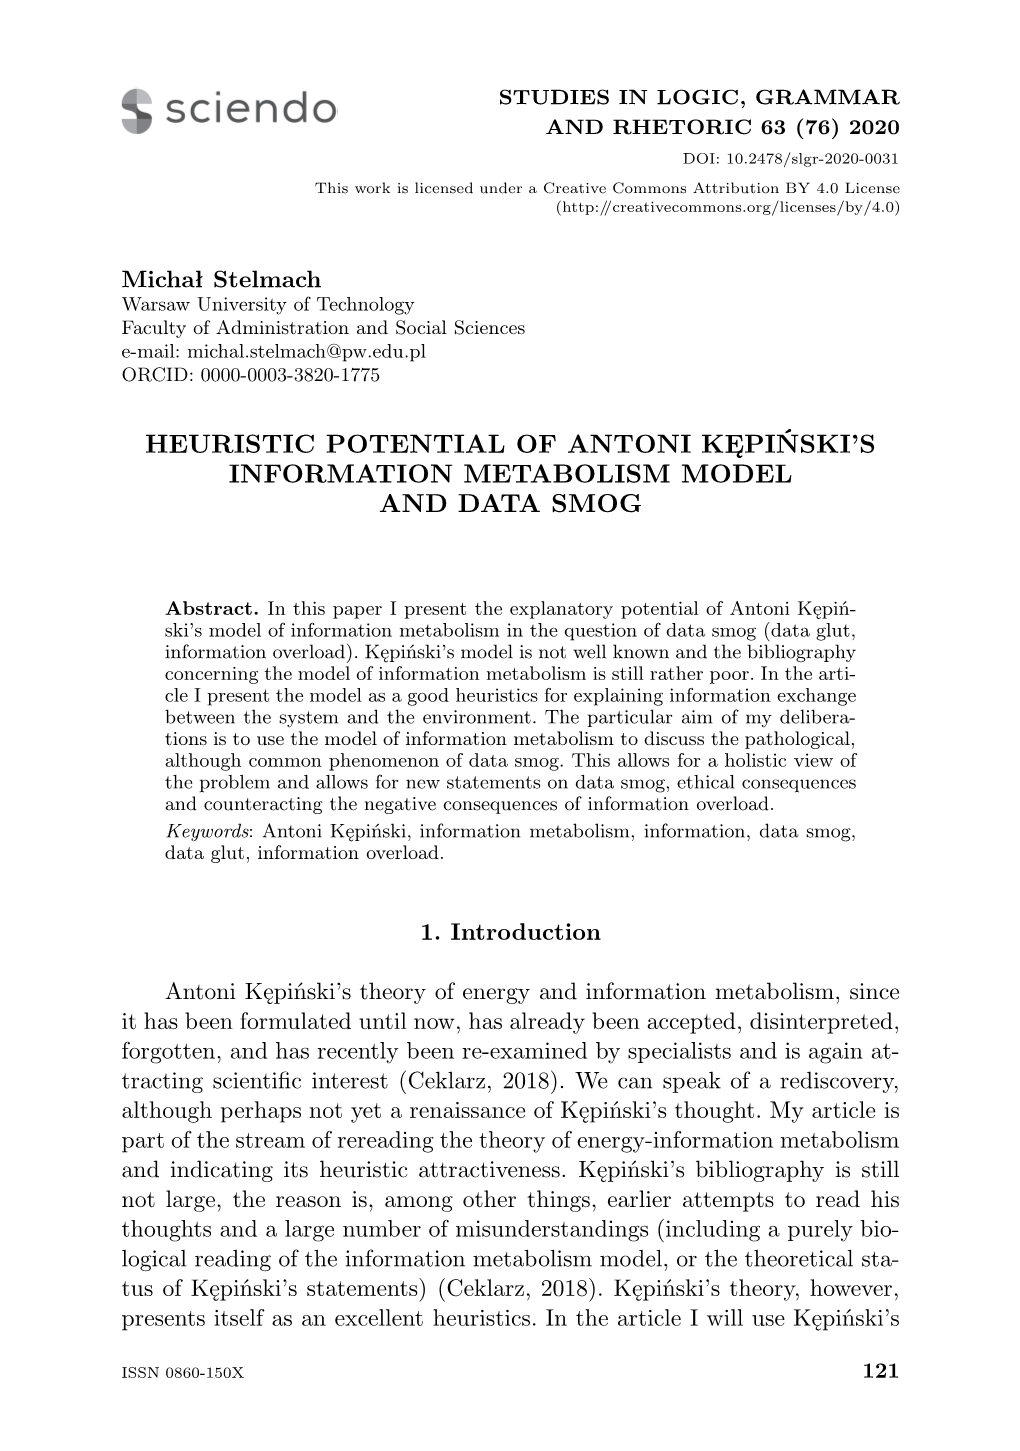 Heuristic Potential of Antoni Kępiński's Information